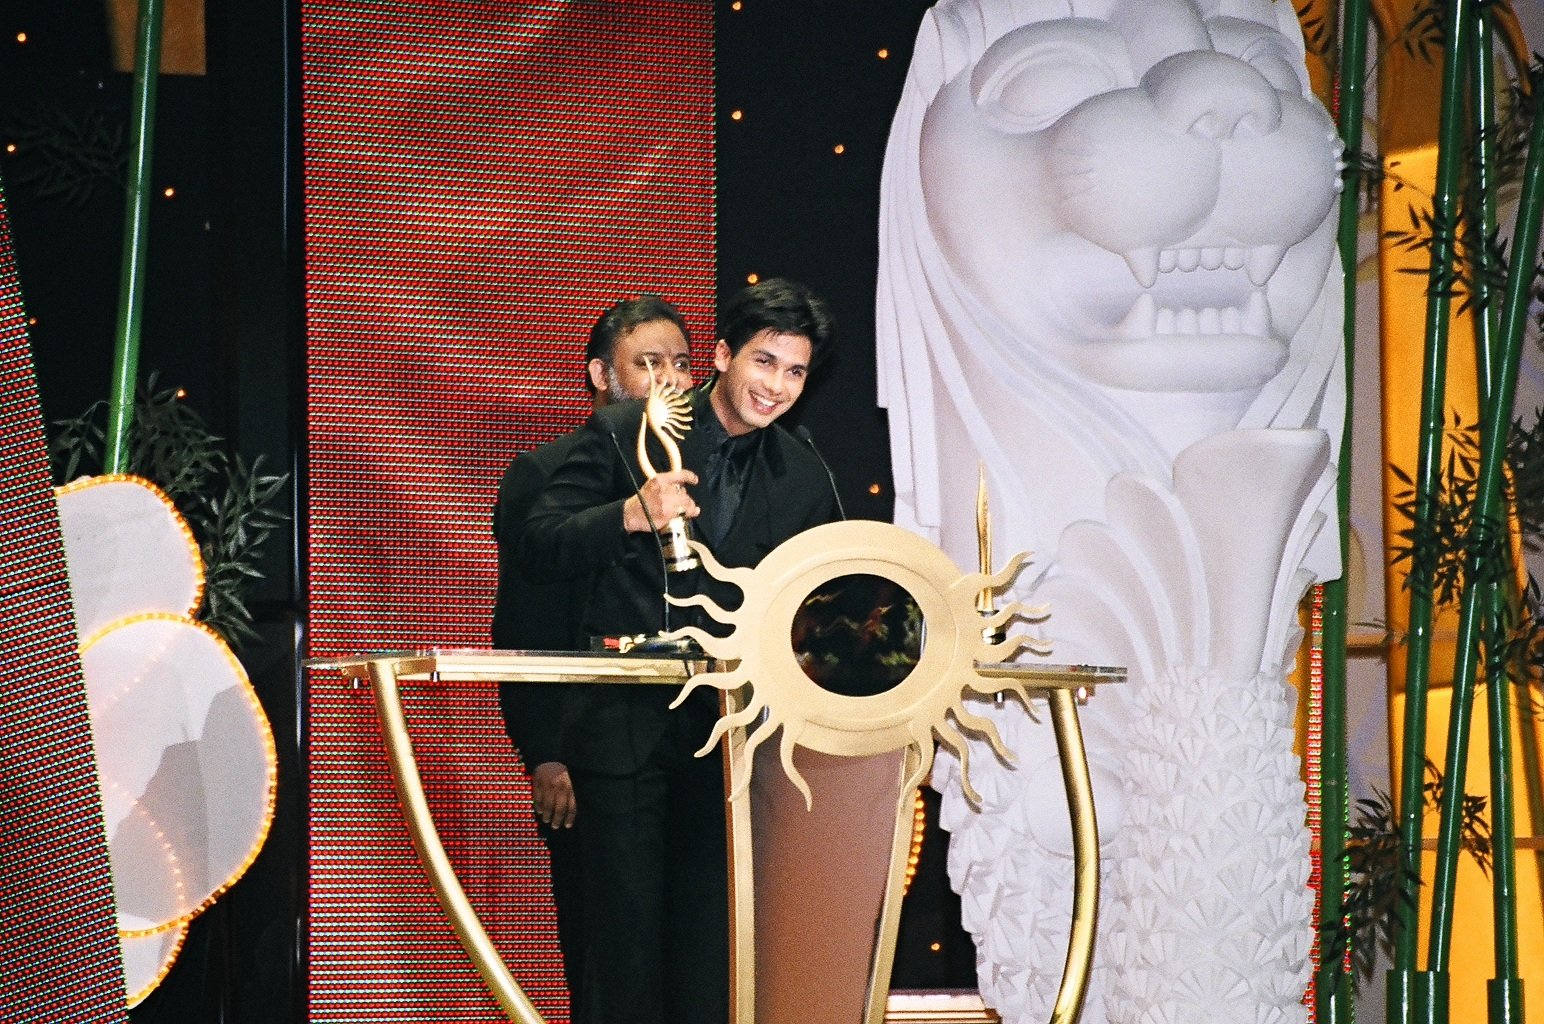 shahid accepts an award at the iifa awards 2004 in singapore